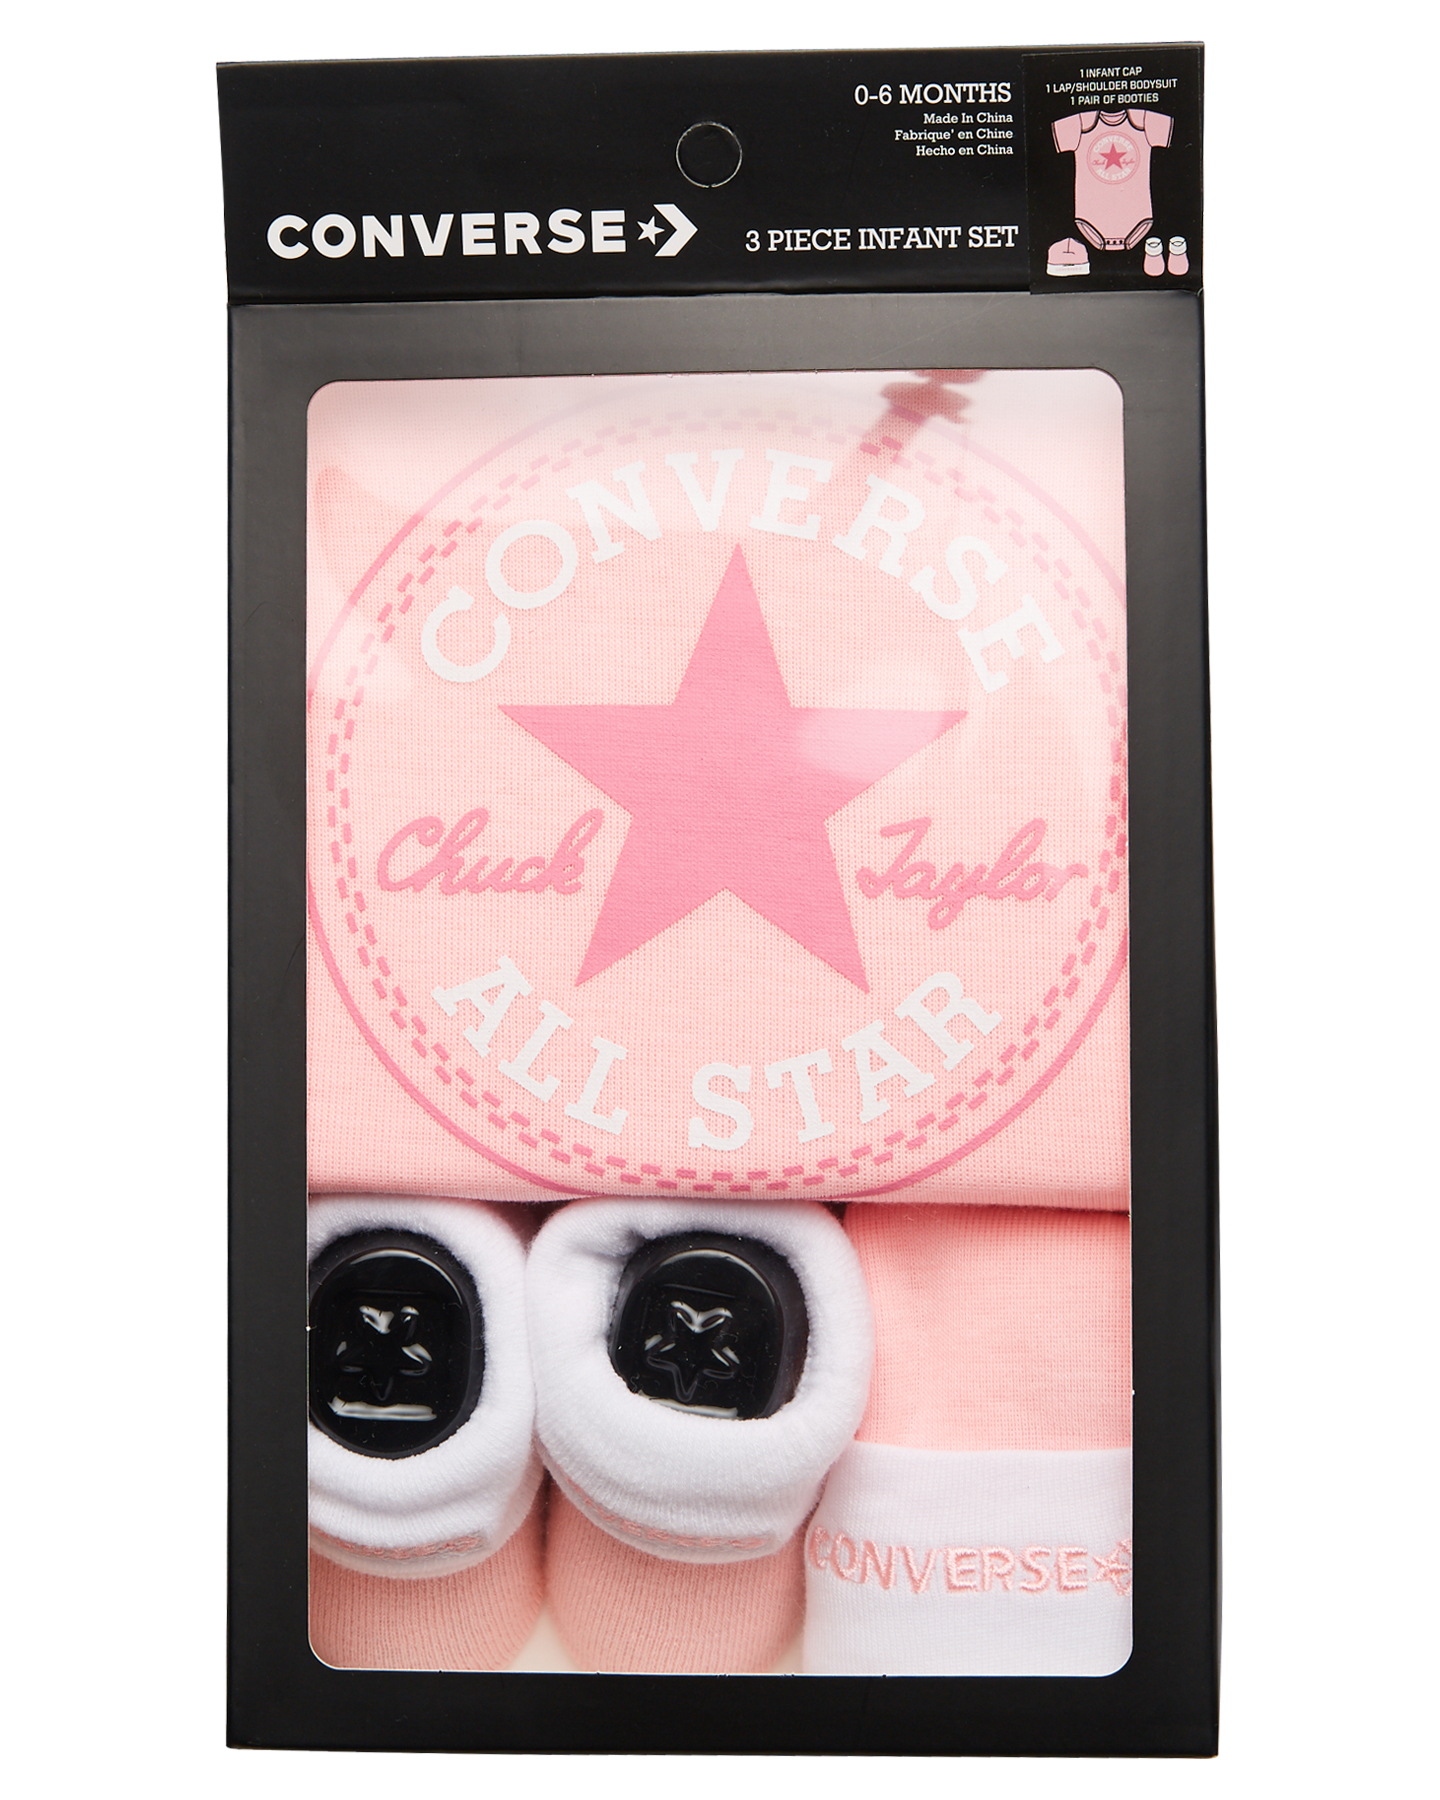 converse baby set